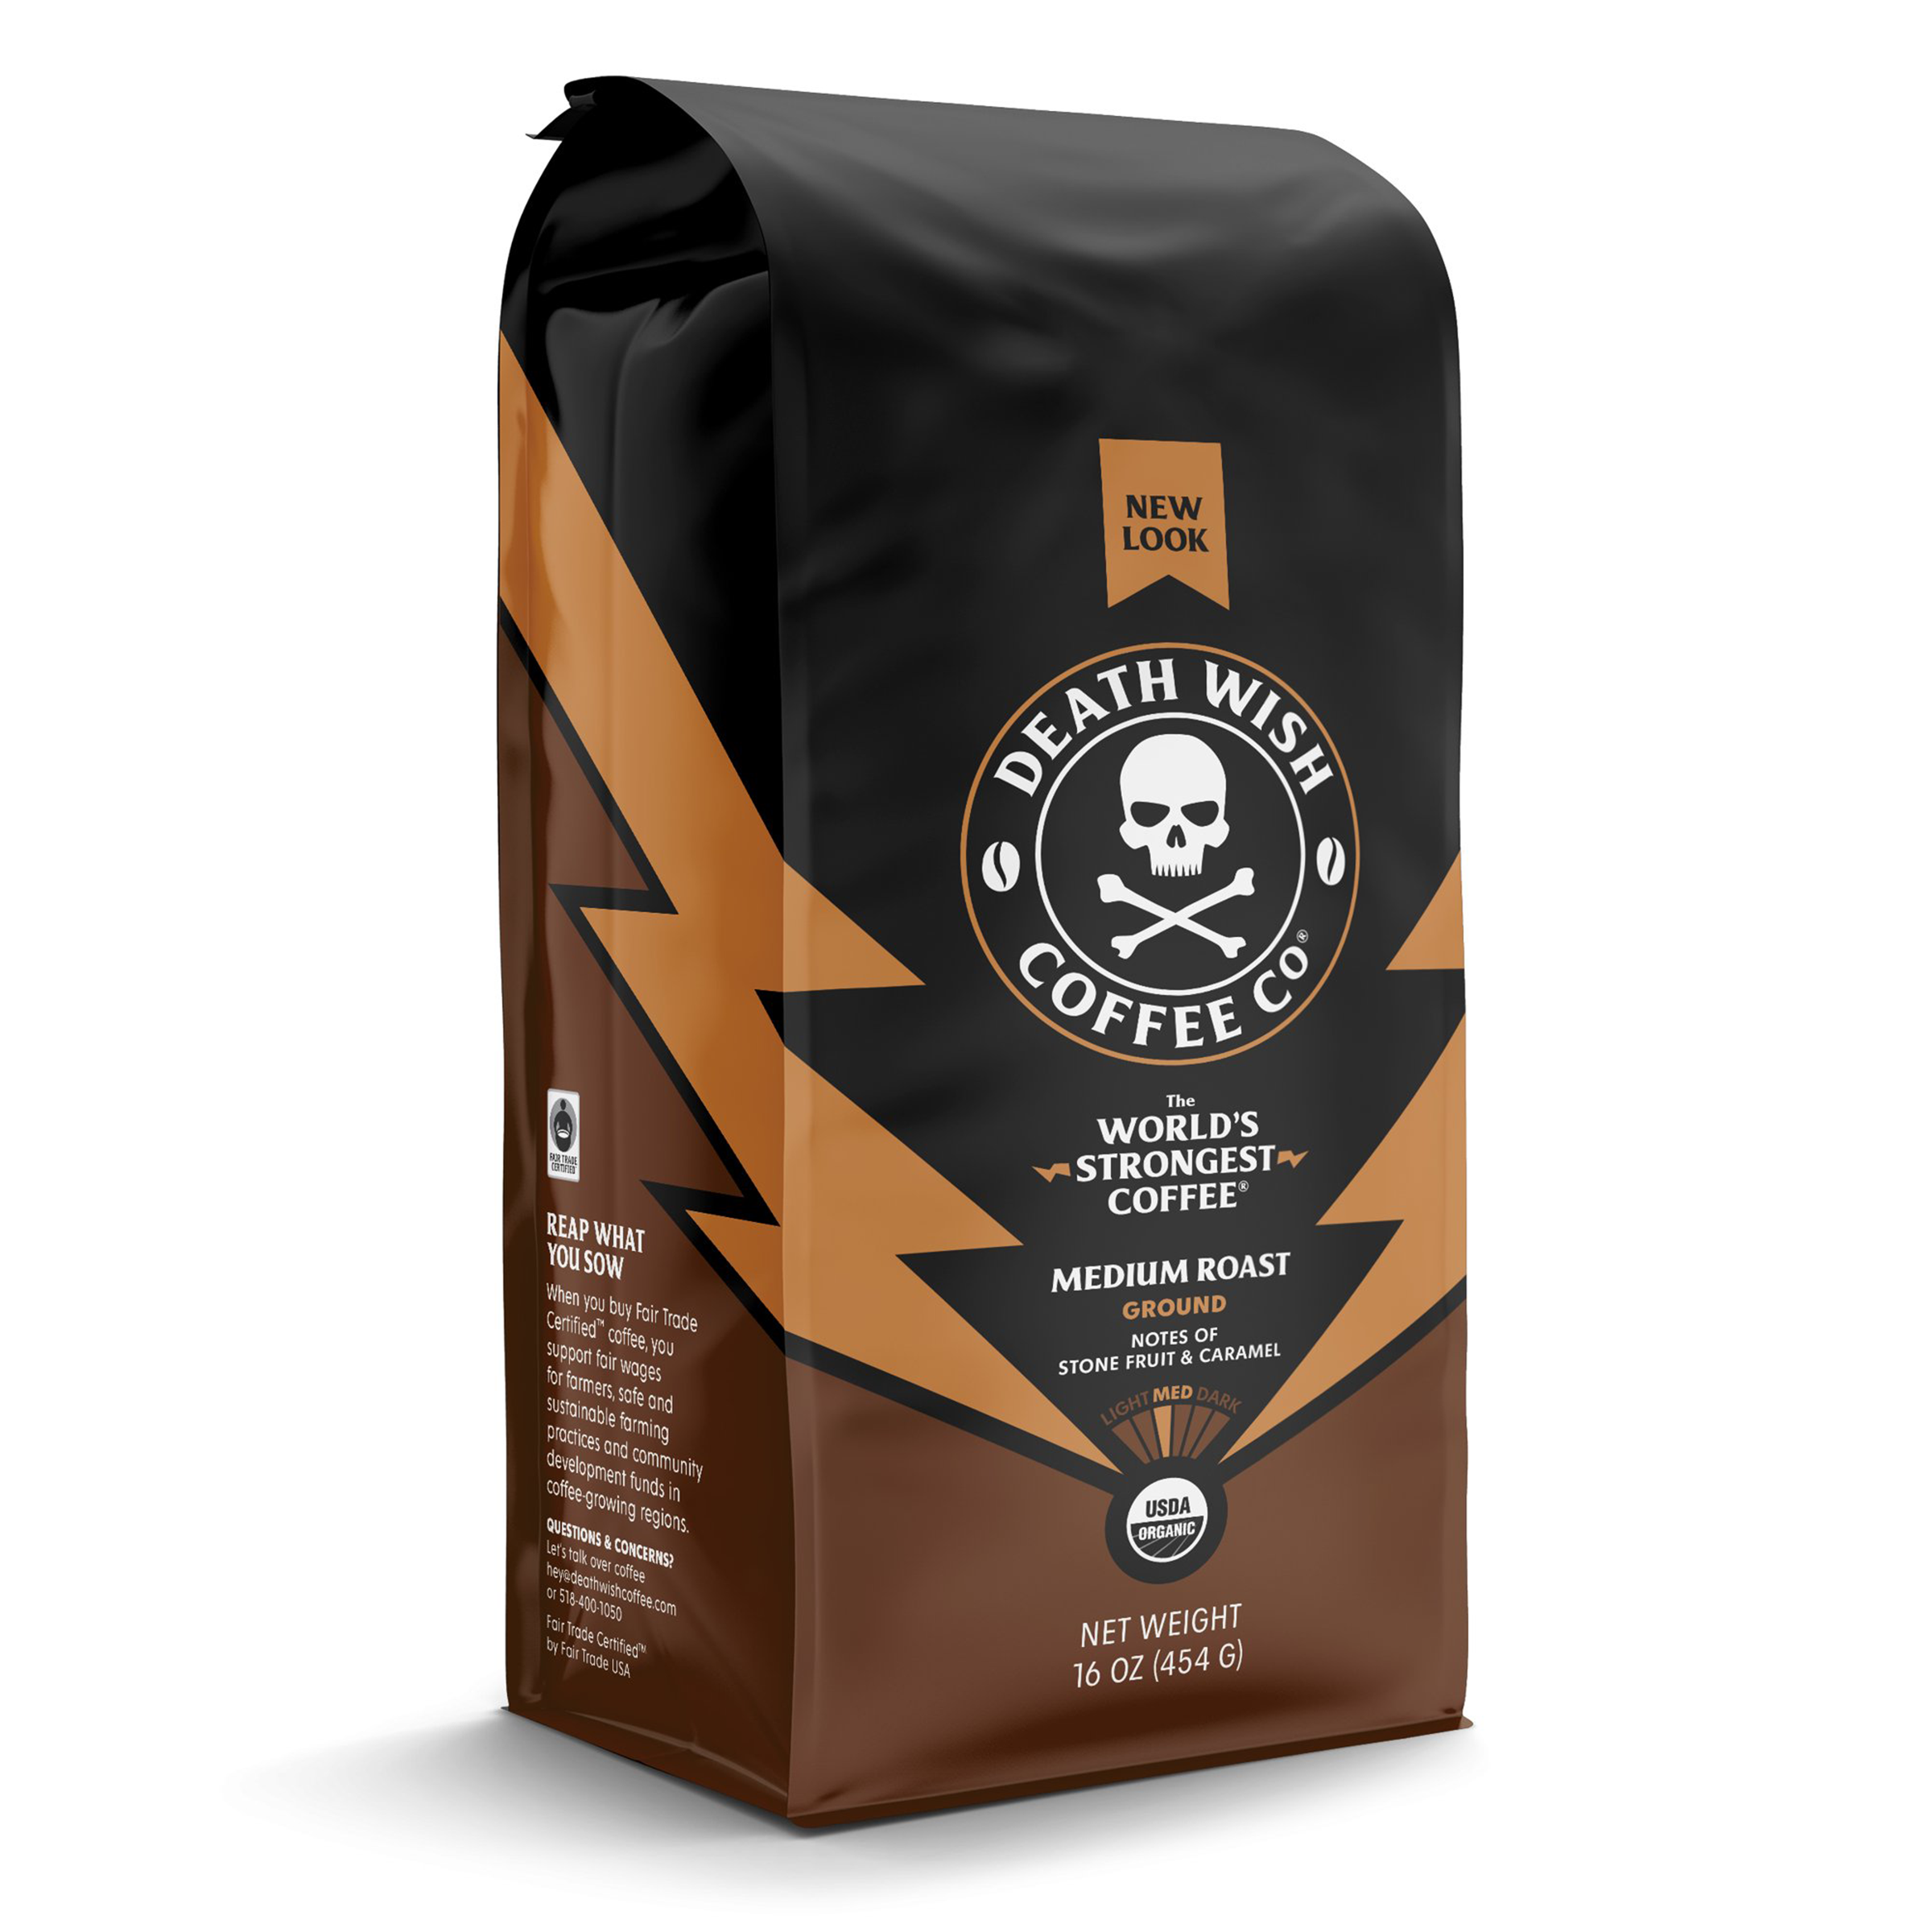 Death Wish (Medium Roast) "Worlds Strongest Coffee"